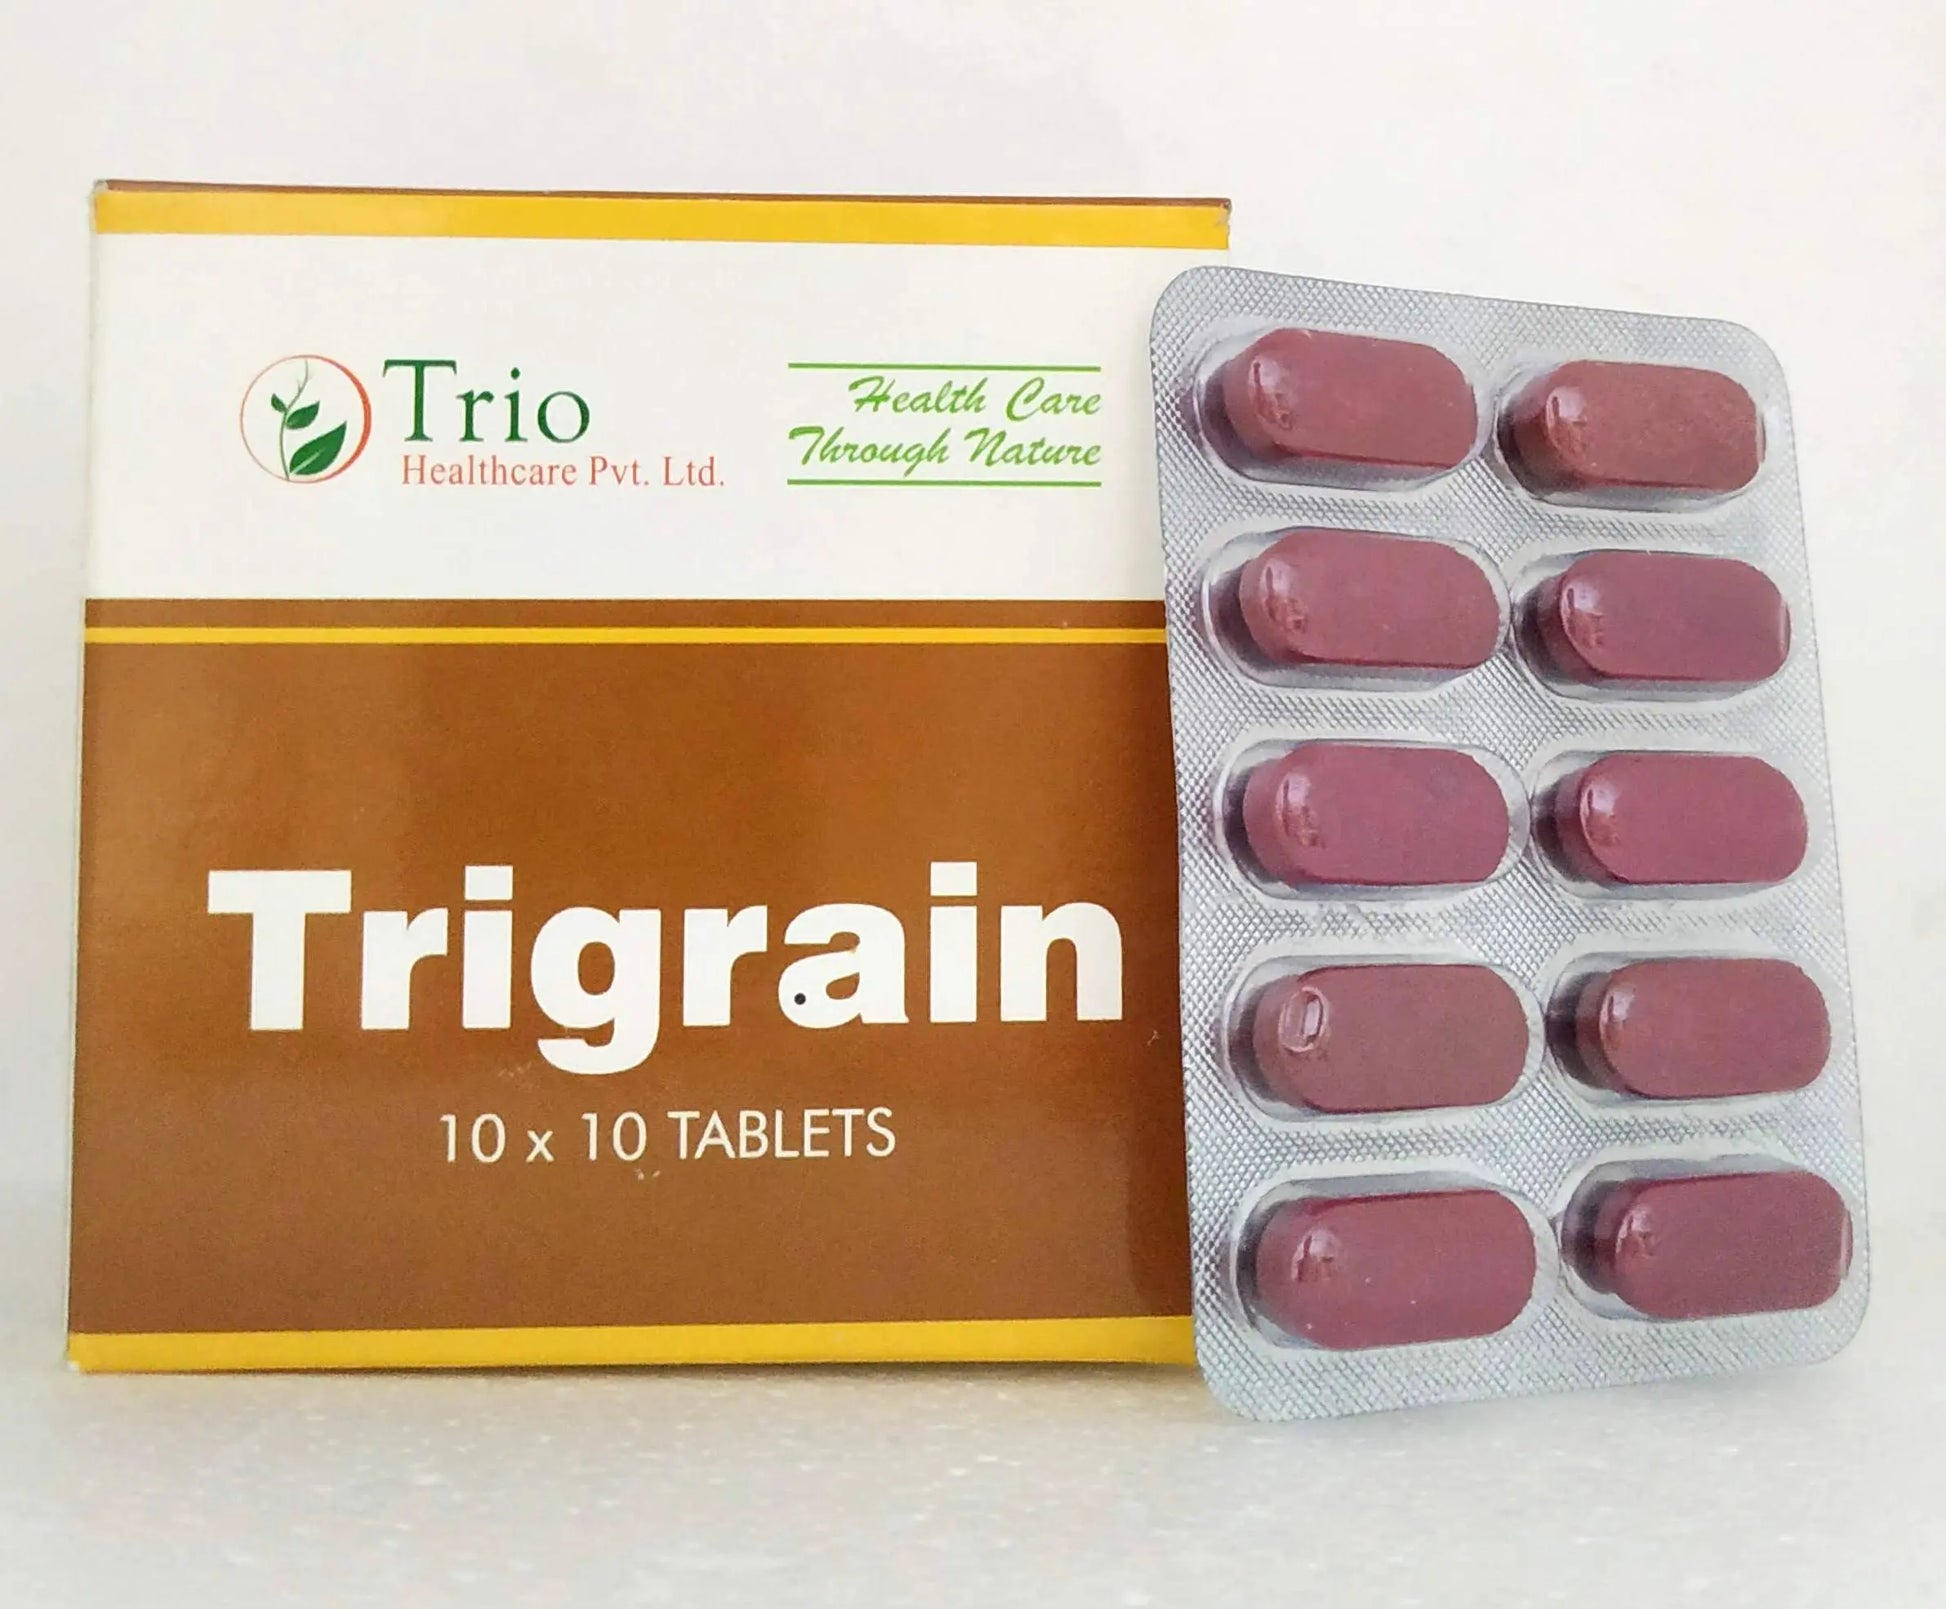 Trigrain tablets - 10tablets Trio